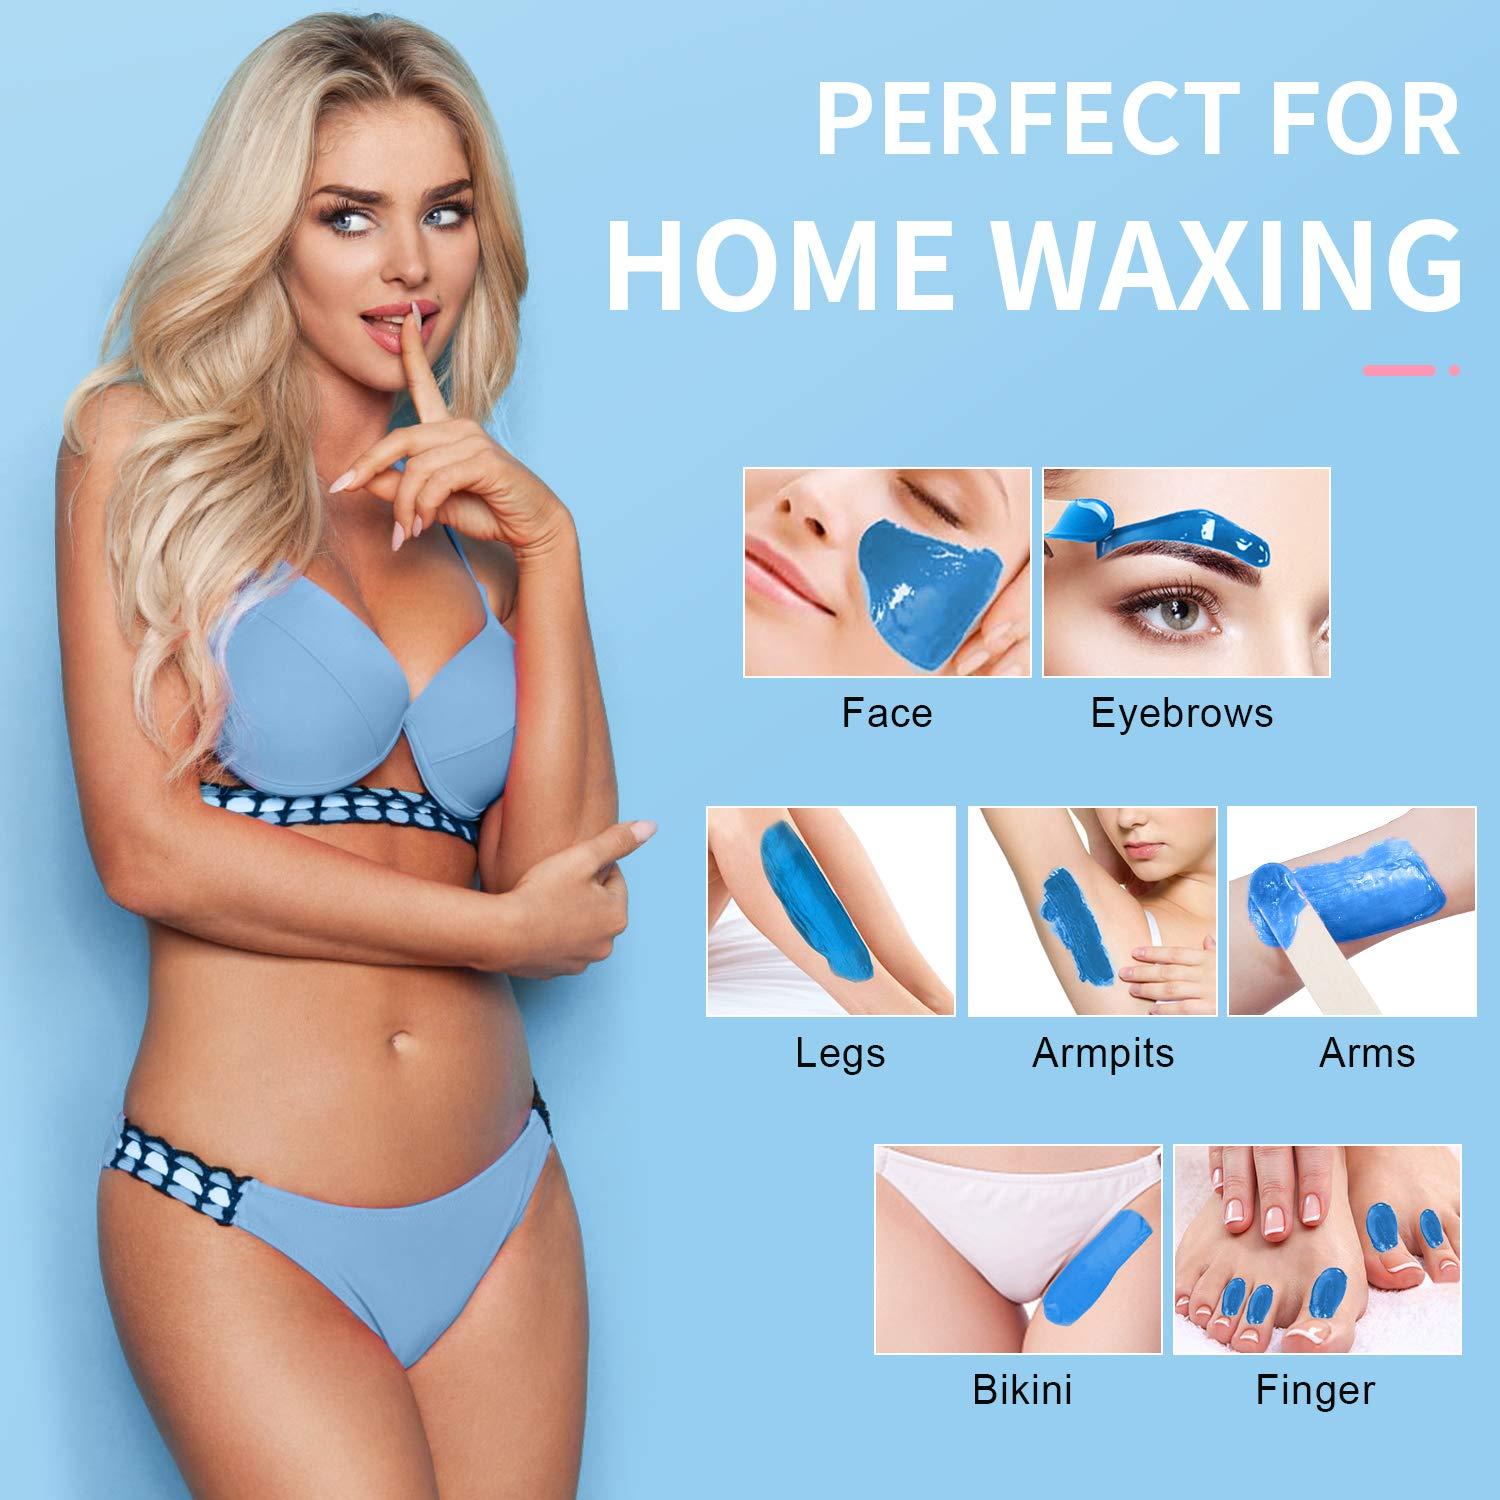 Waxing Kit, AVAII Wax Warmer Hair Removal Wax Kit with 4 Bags Hard Wax  (3.5oz/Bag) 20 Wax Applicator Sticks for Full Body, Legs, Face, Eyebrows,  Bikini Women Men at Home Waxing price